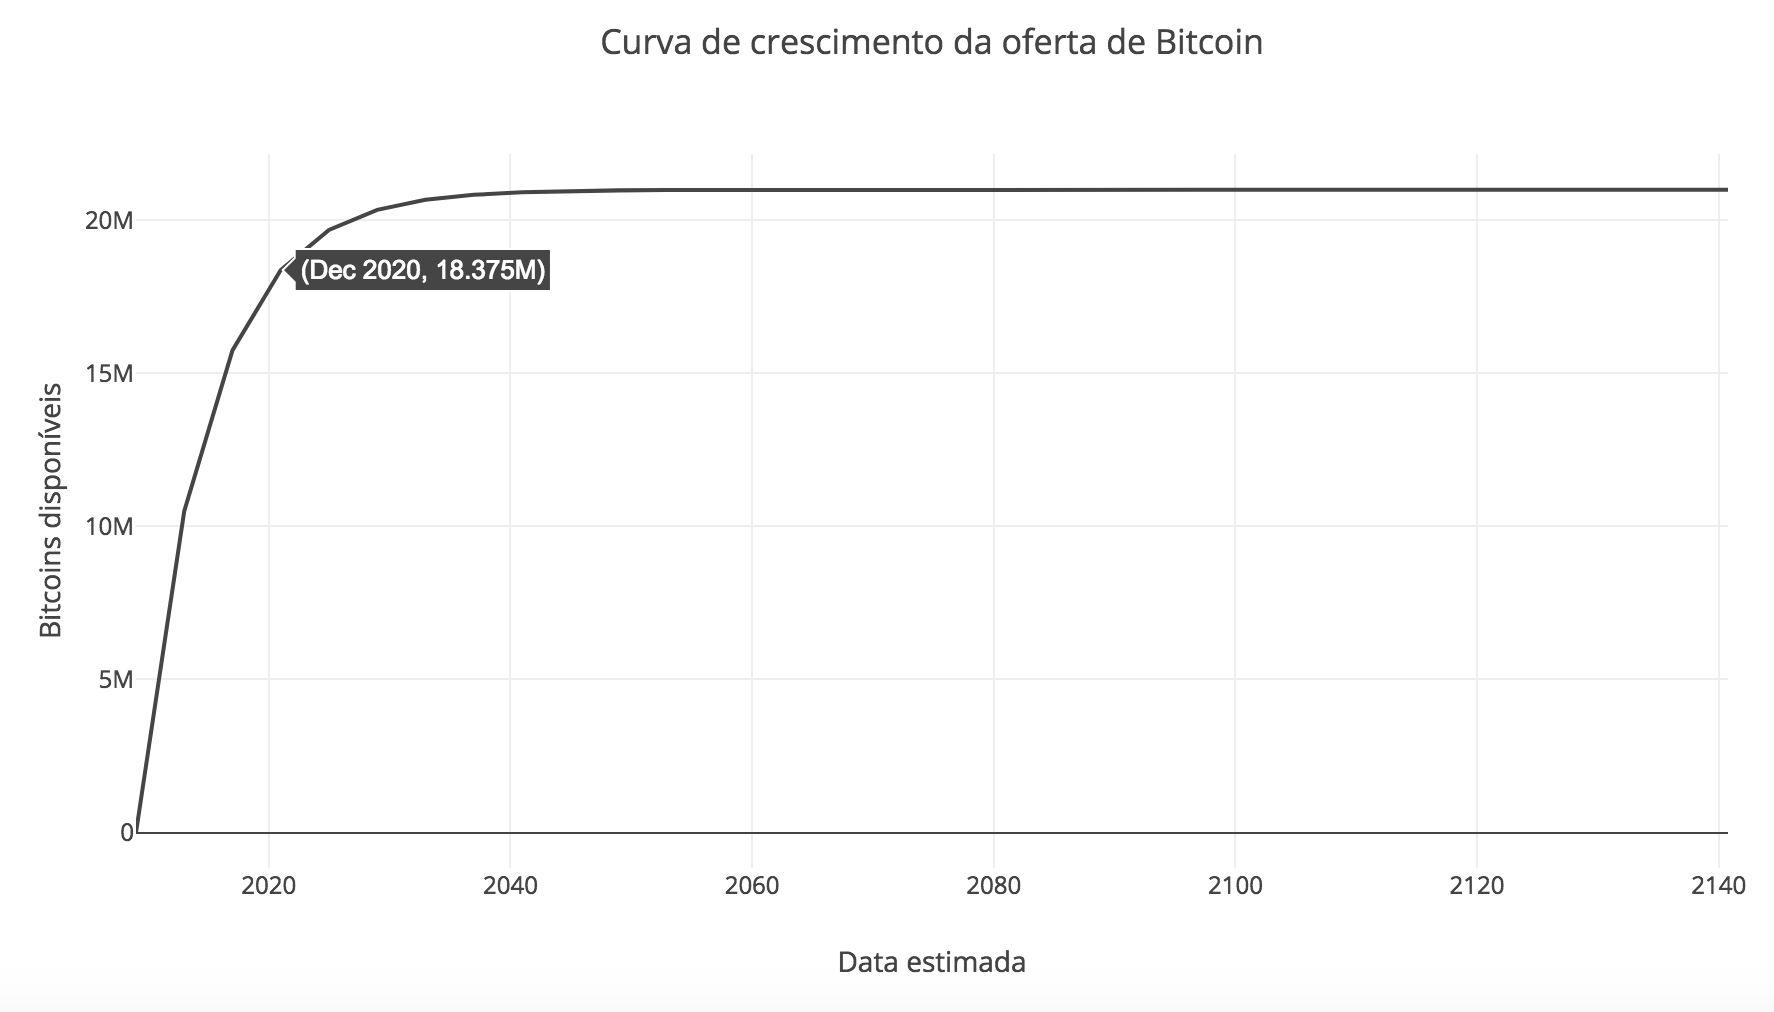 Figura 3 - Curva de crescimento da oferta de Bitcoin